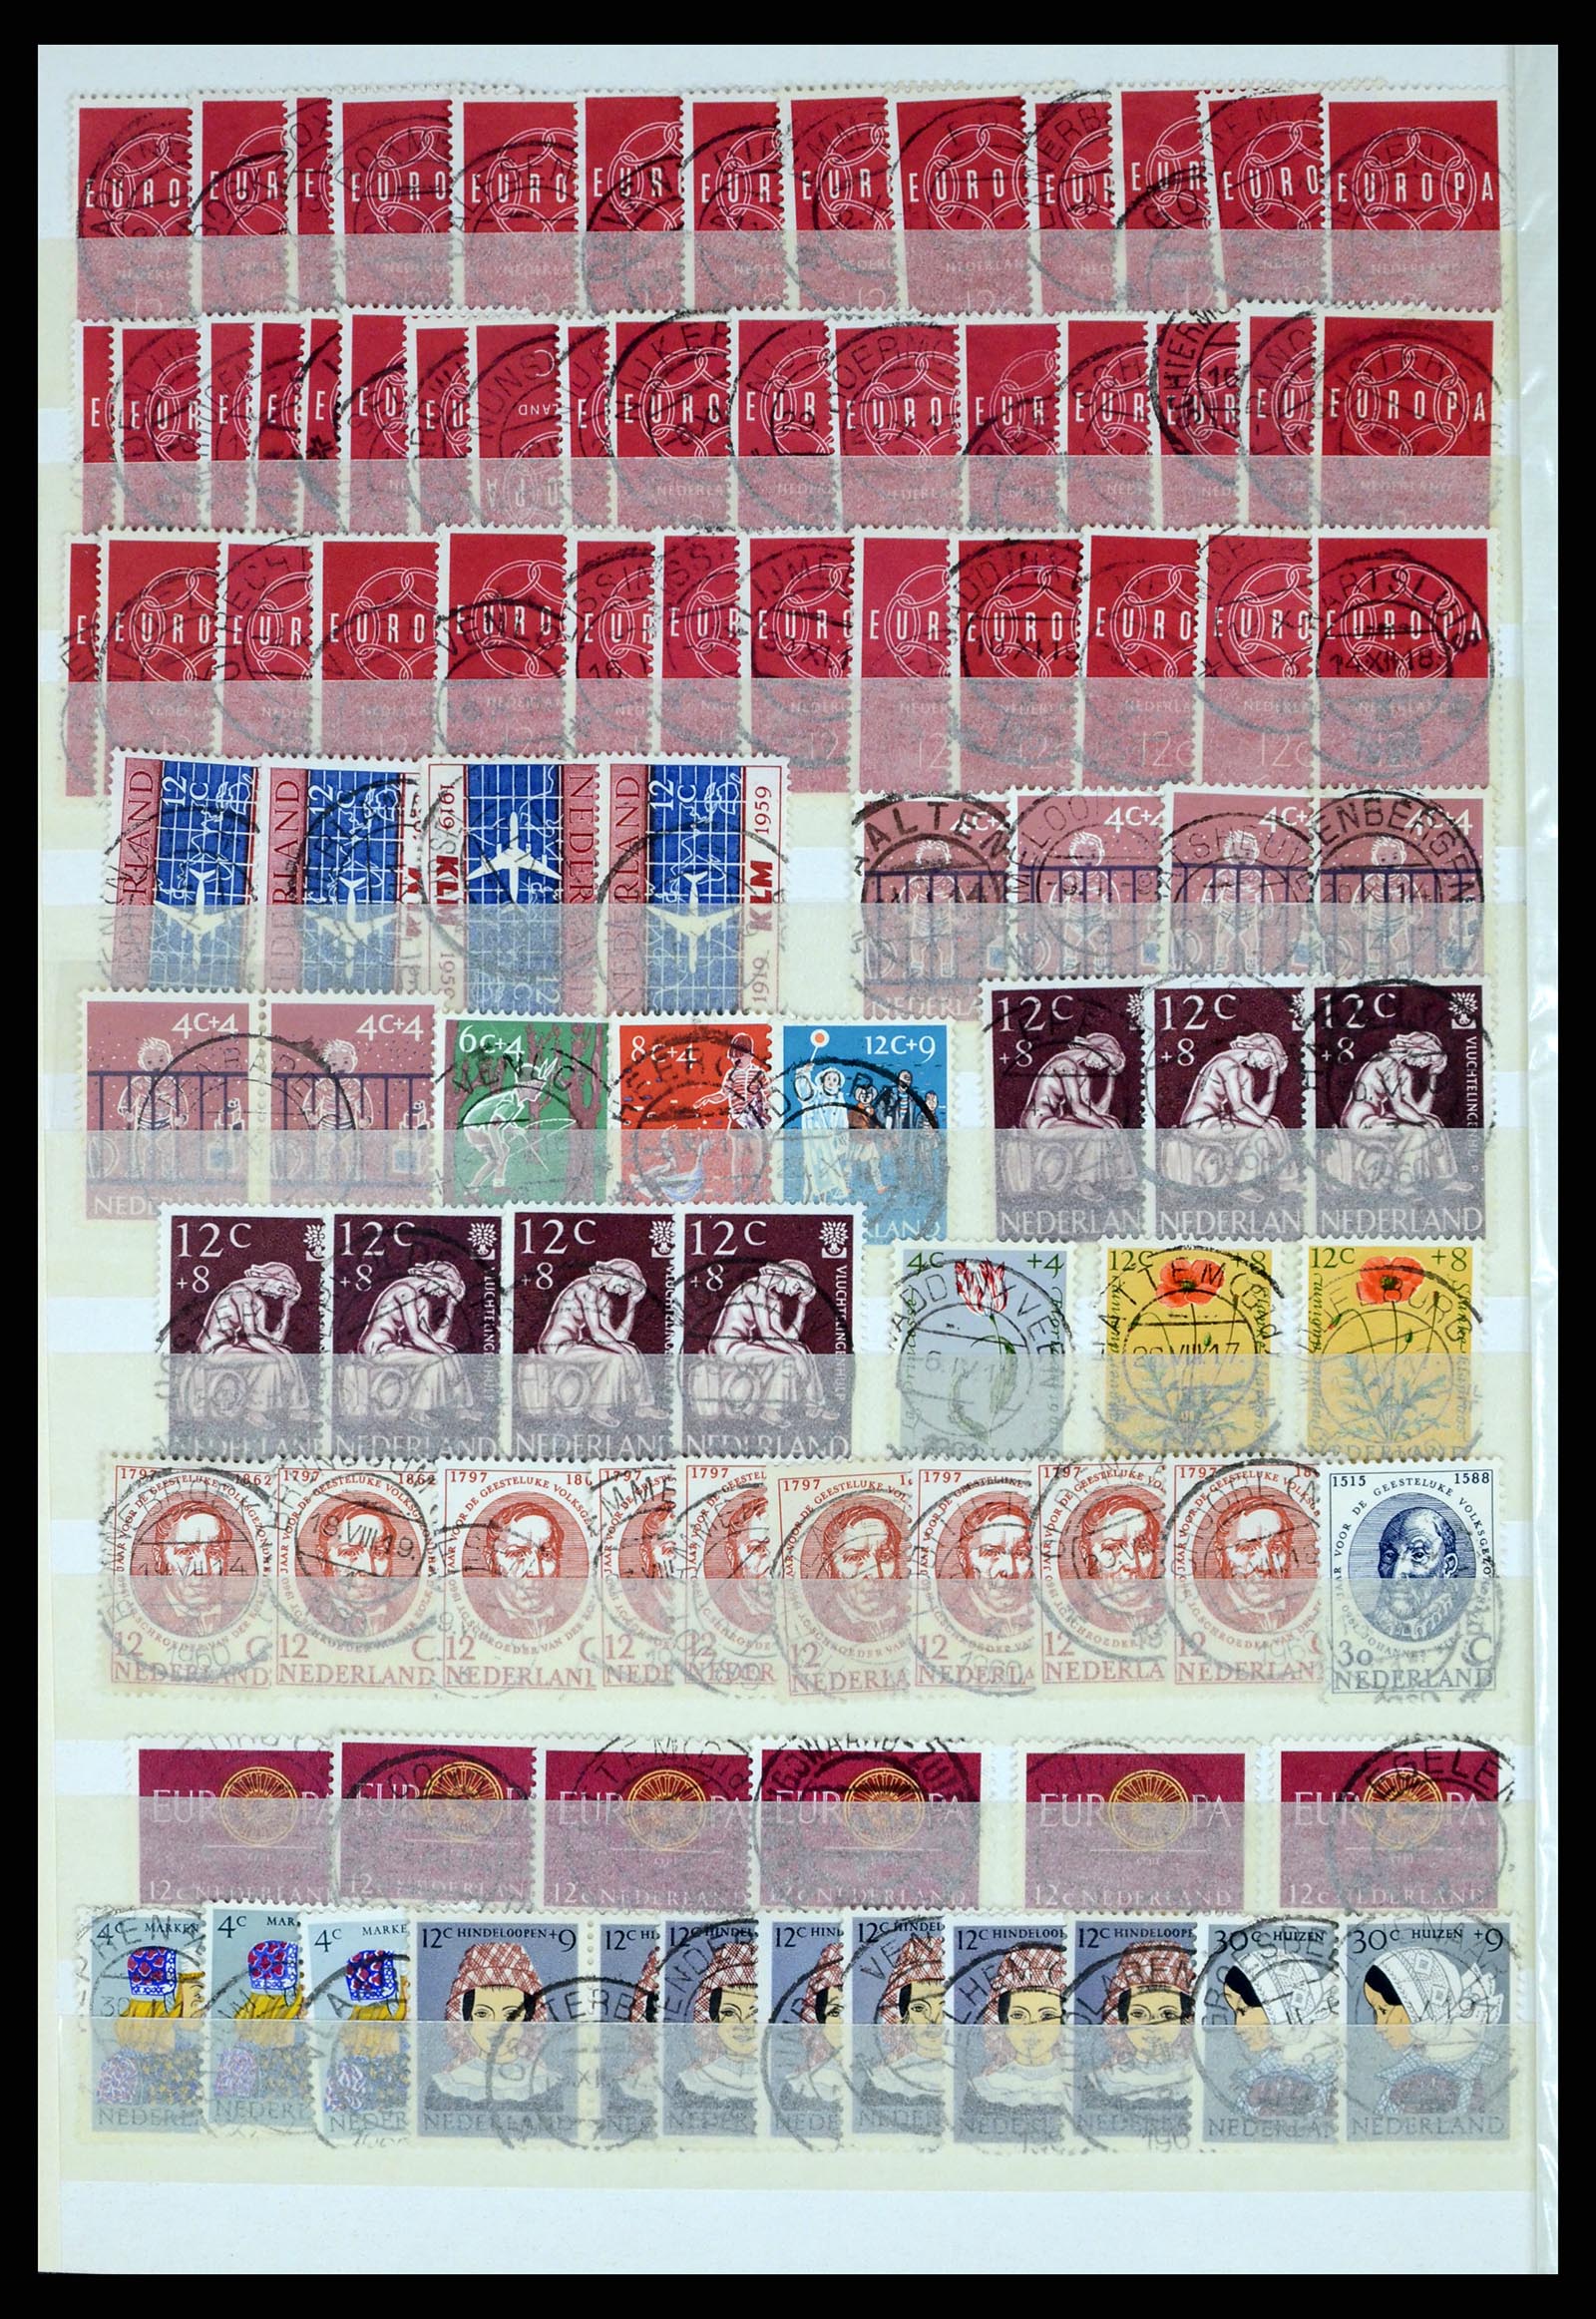 37424 054 - Stamp collection 37424 Netherlands shortbar cancels.